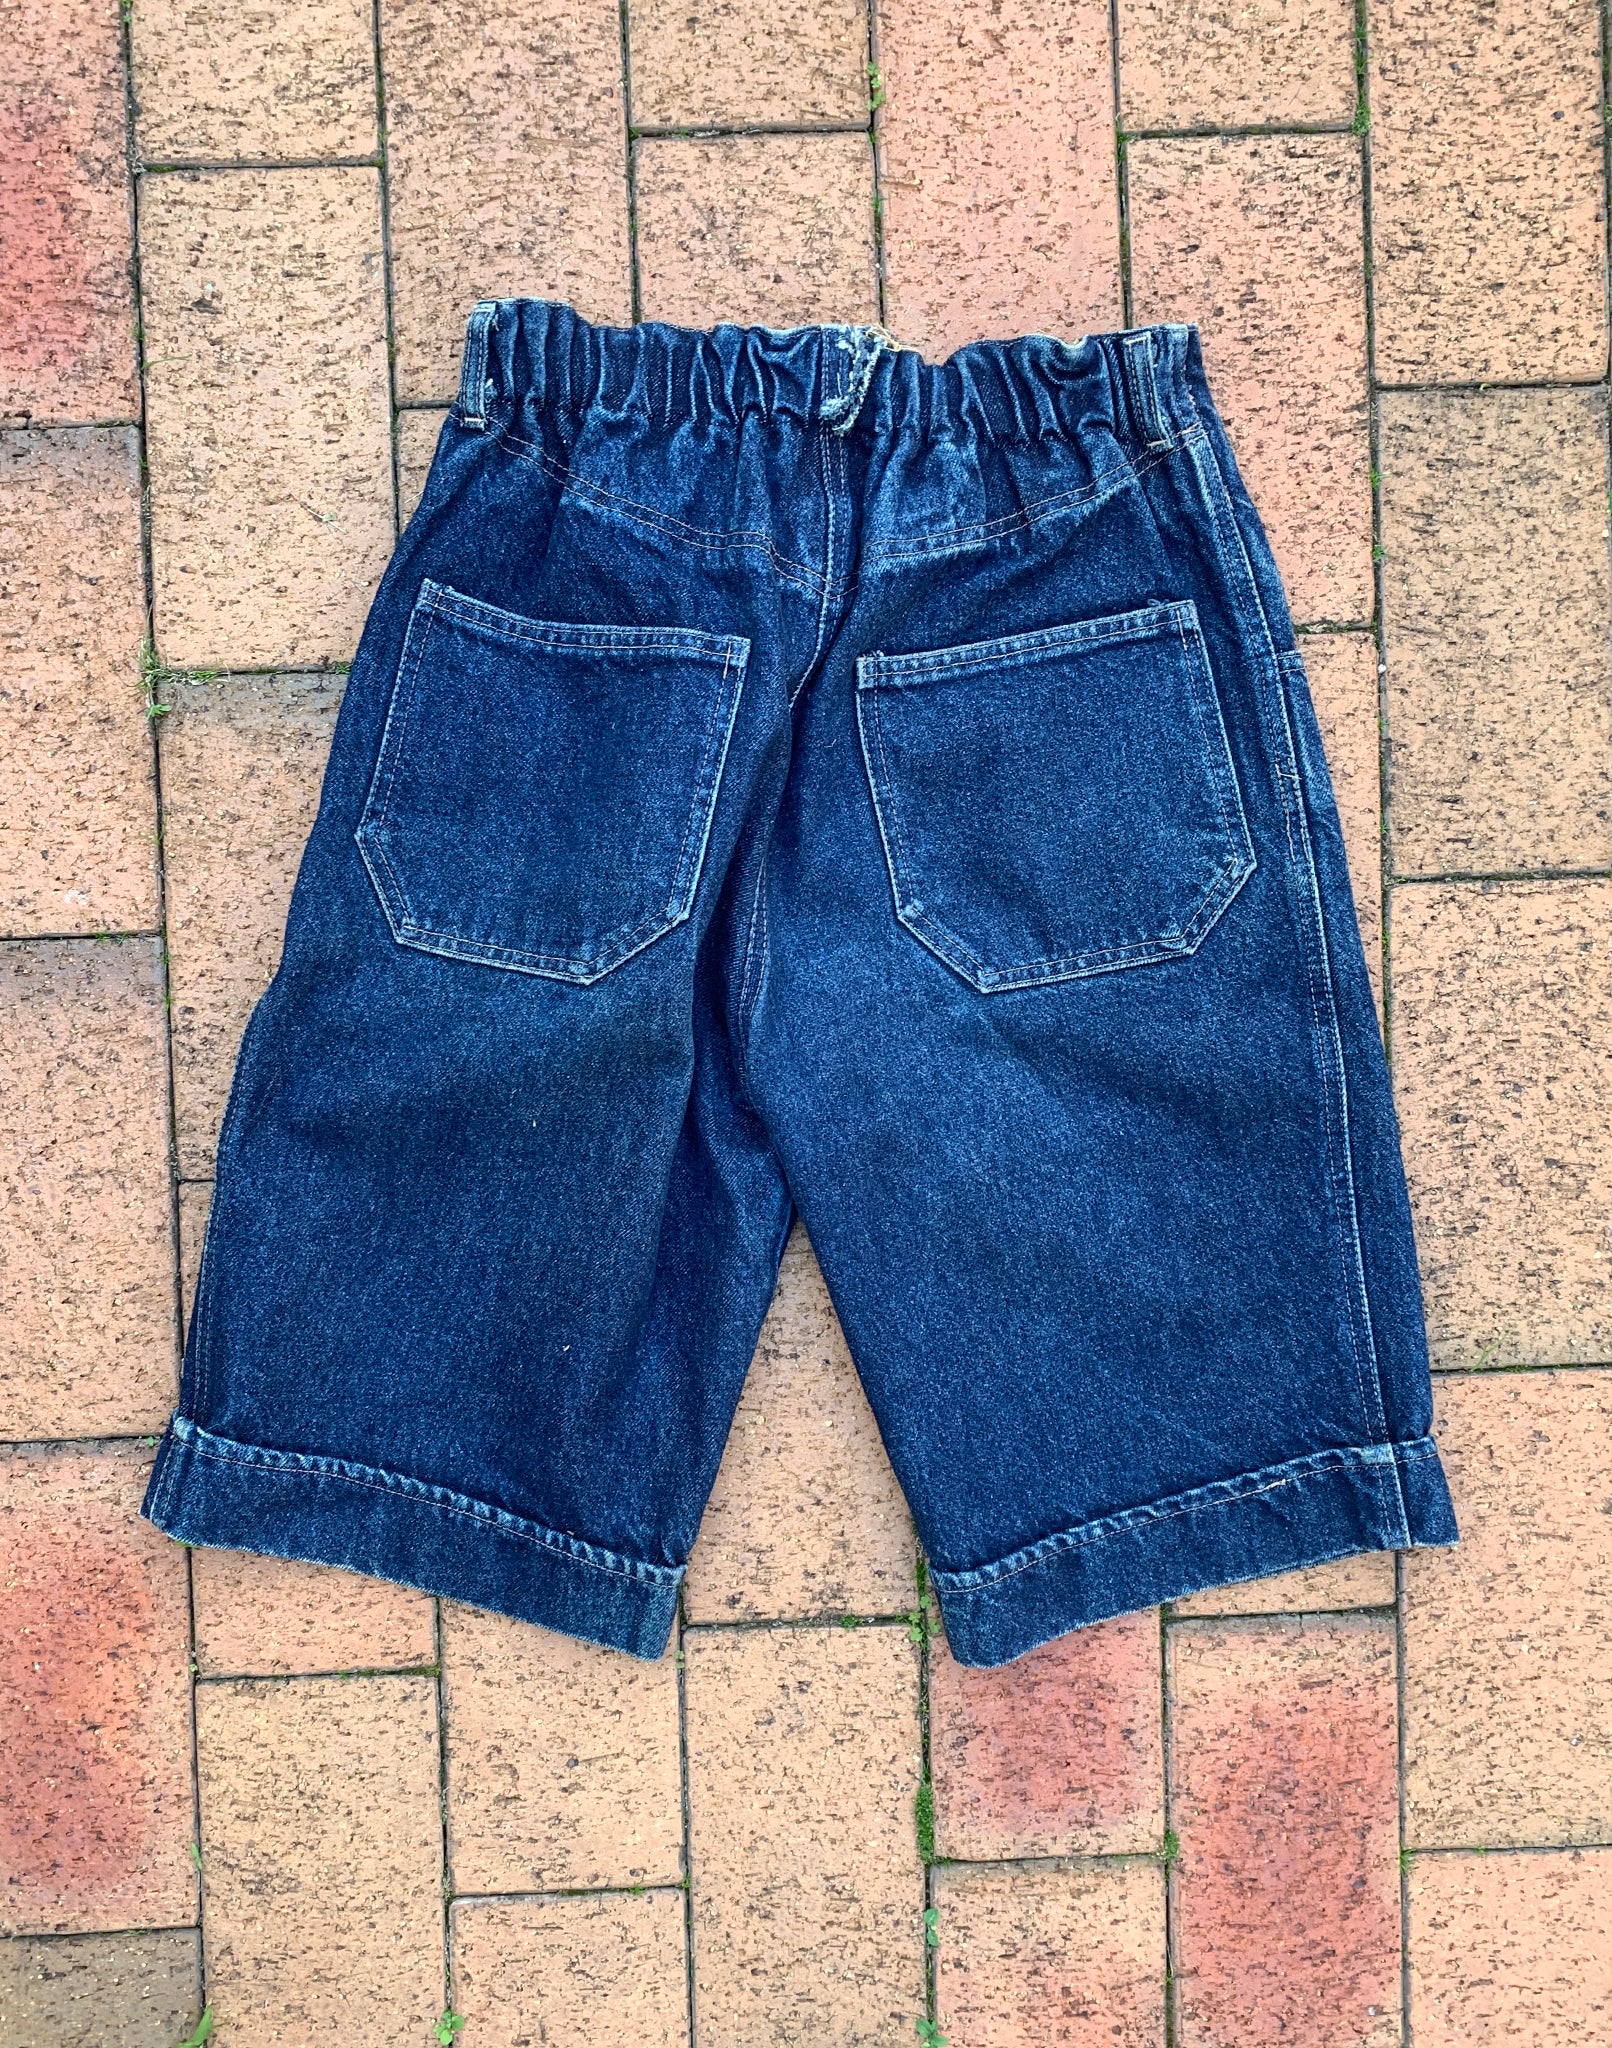 Vintage 80's Geiger Down Under Denim Long Shorts - Size S